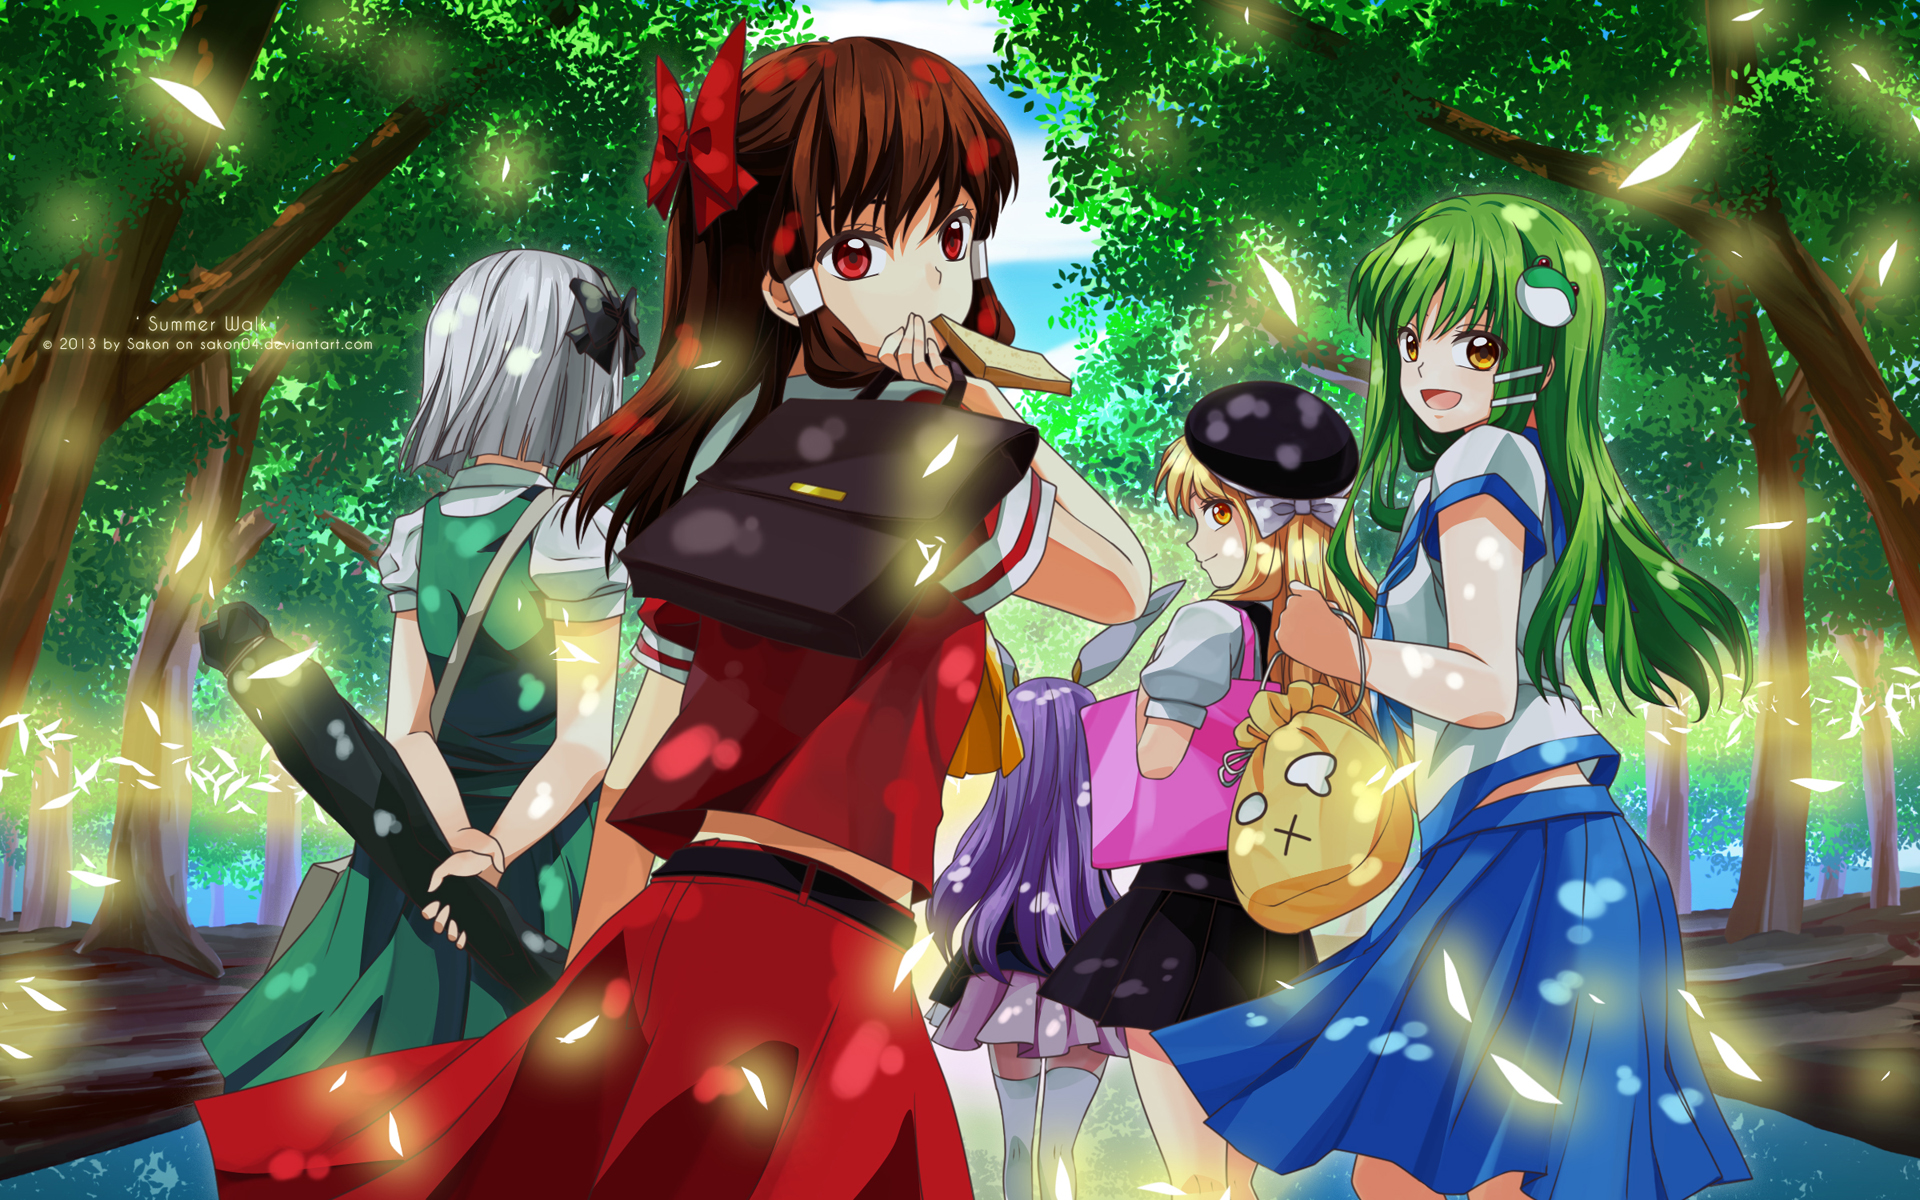 Baixe gratuitamente a imagem Anime, Touhou, Youmu Konpaku, Sanae Kochiya, Reimu Hakurei, Marisa Kirisame, Reisen Udongein Inaba na área de trabalho do seu PC